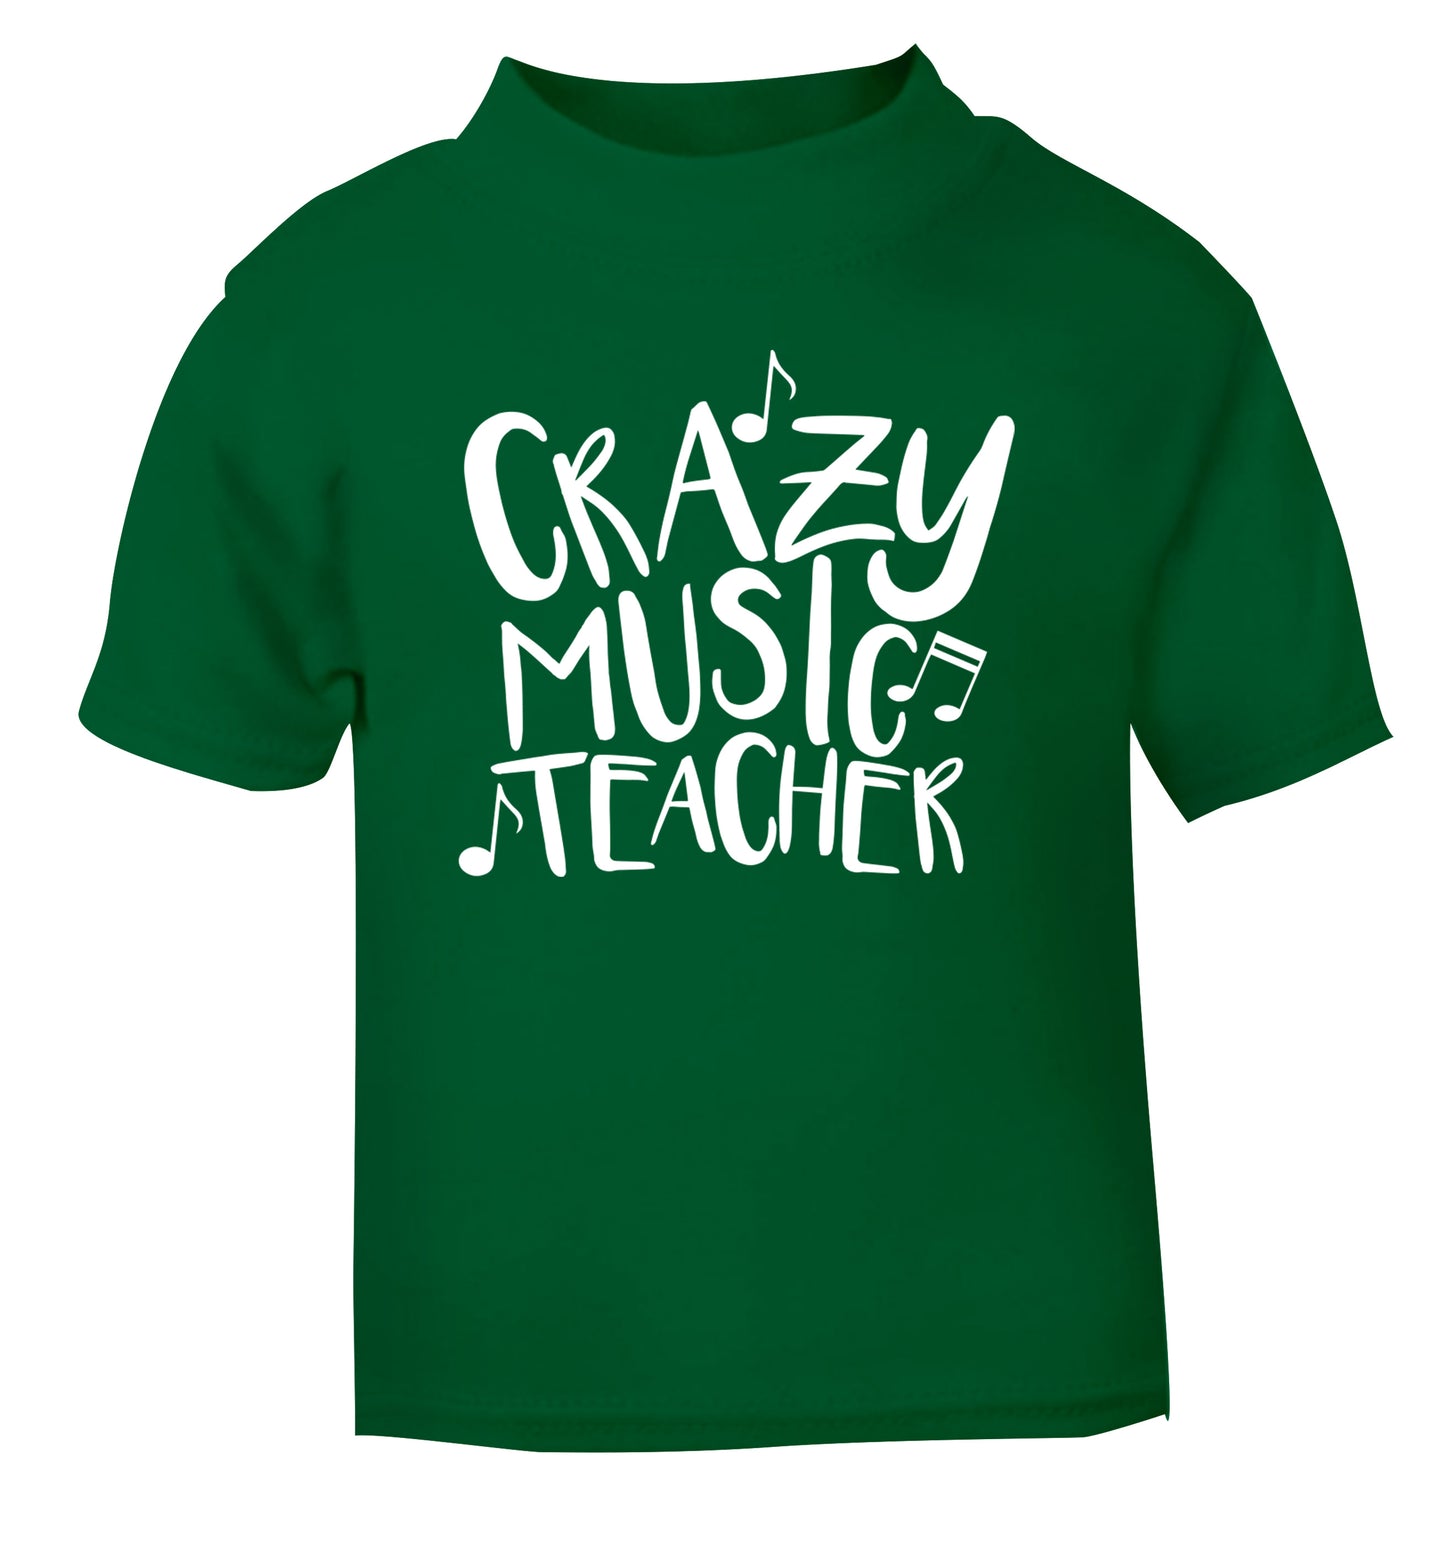 Crazy music teacher green Baby Toddler Tshirt 2 Years